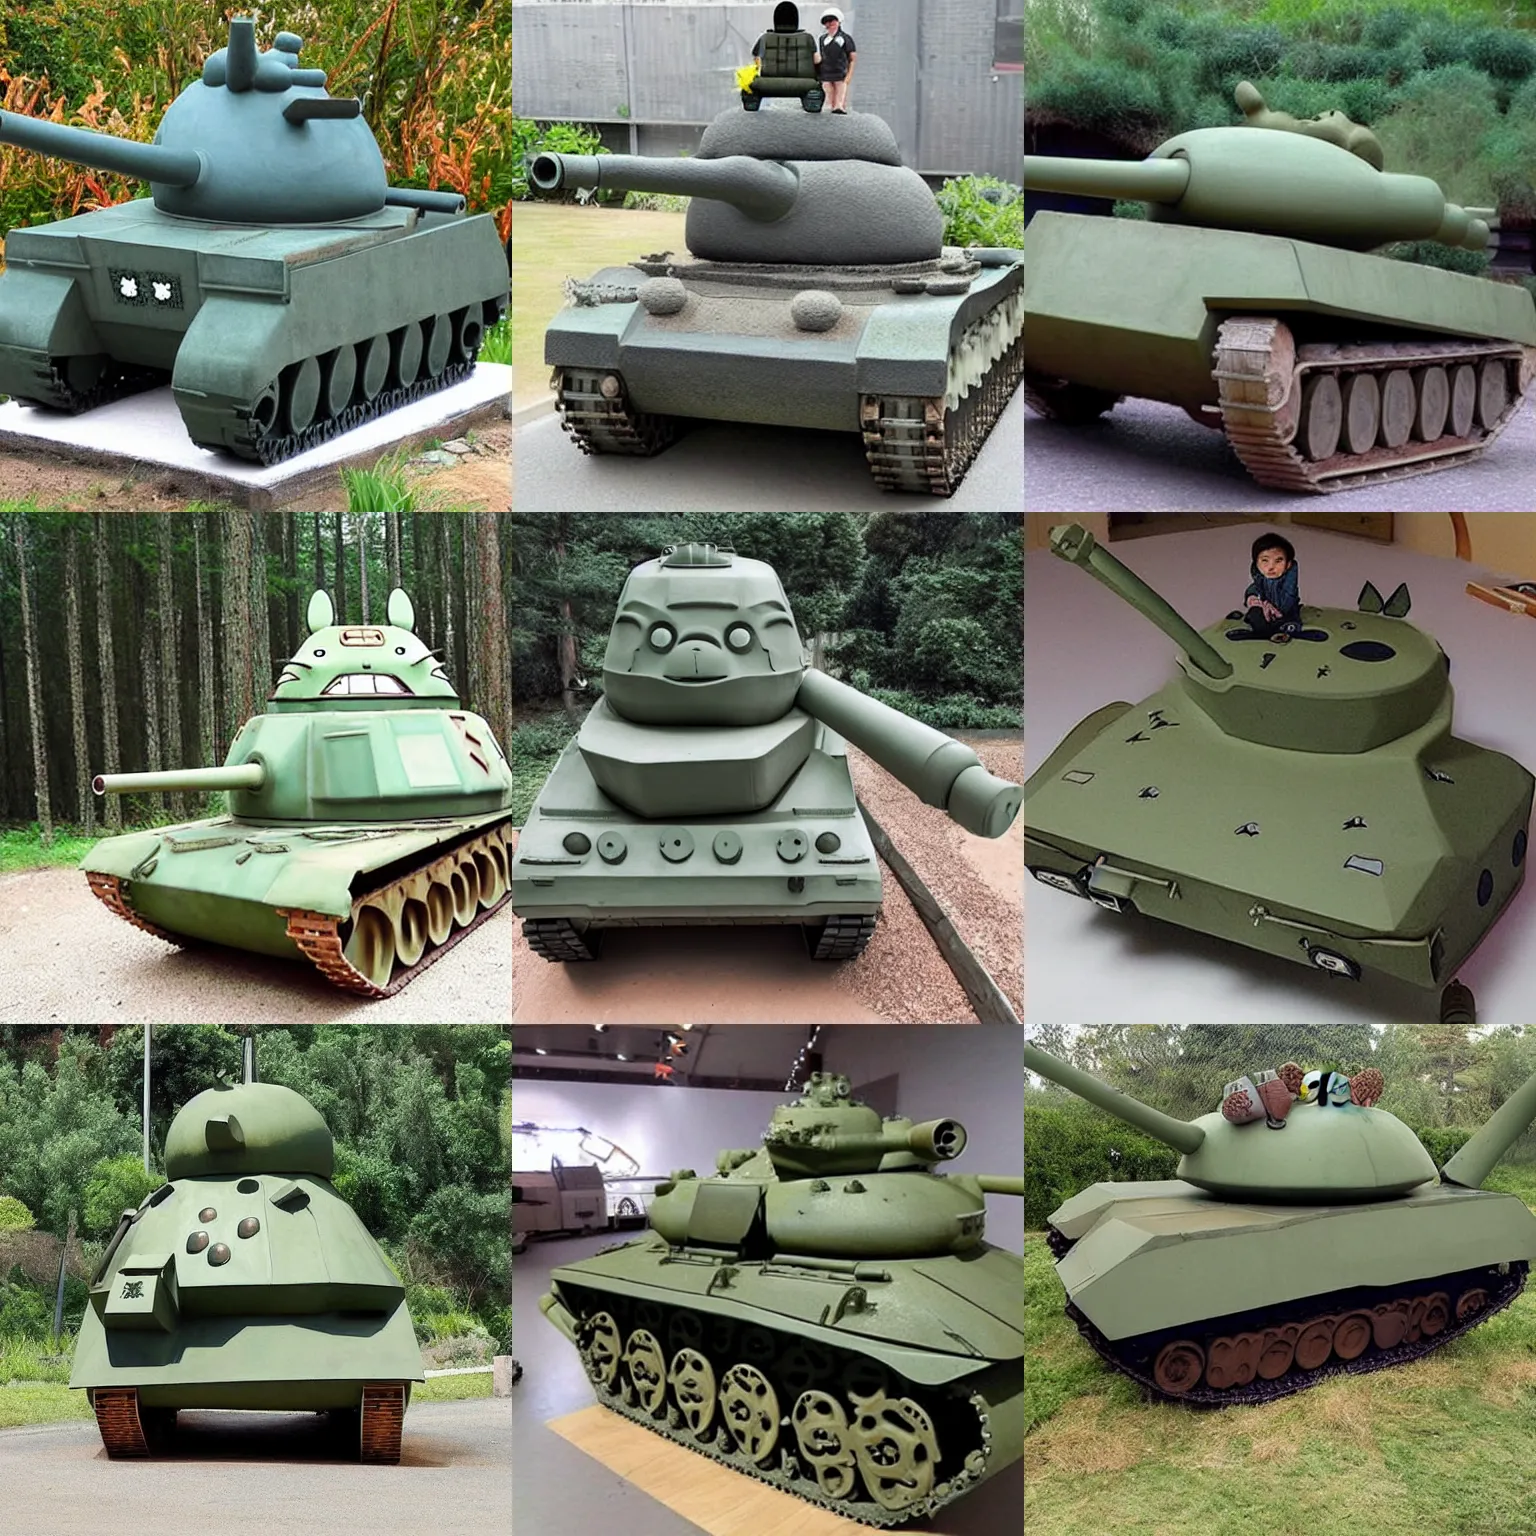 Prompt: a tank shaped like totoro